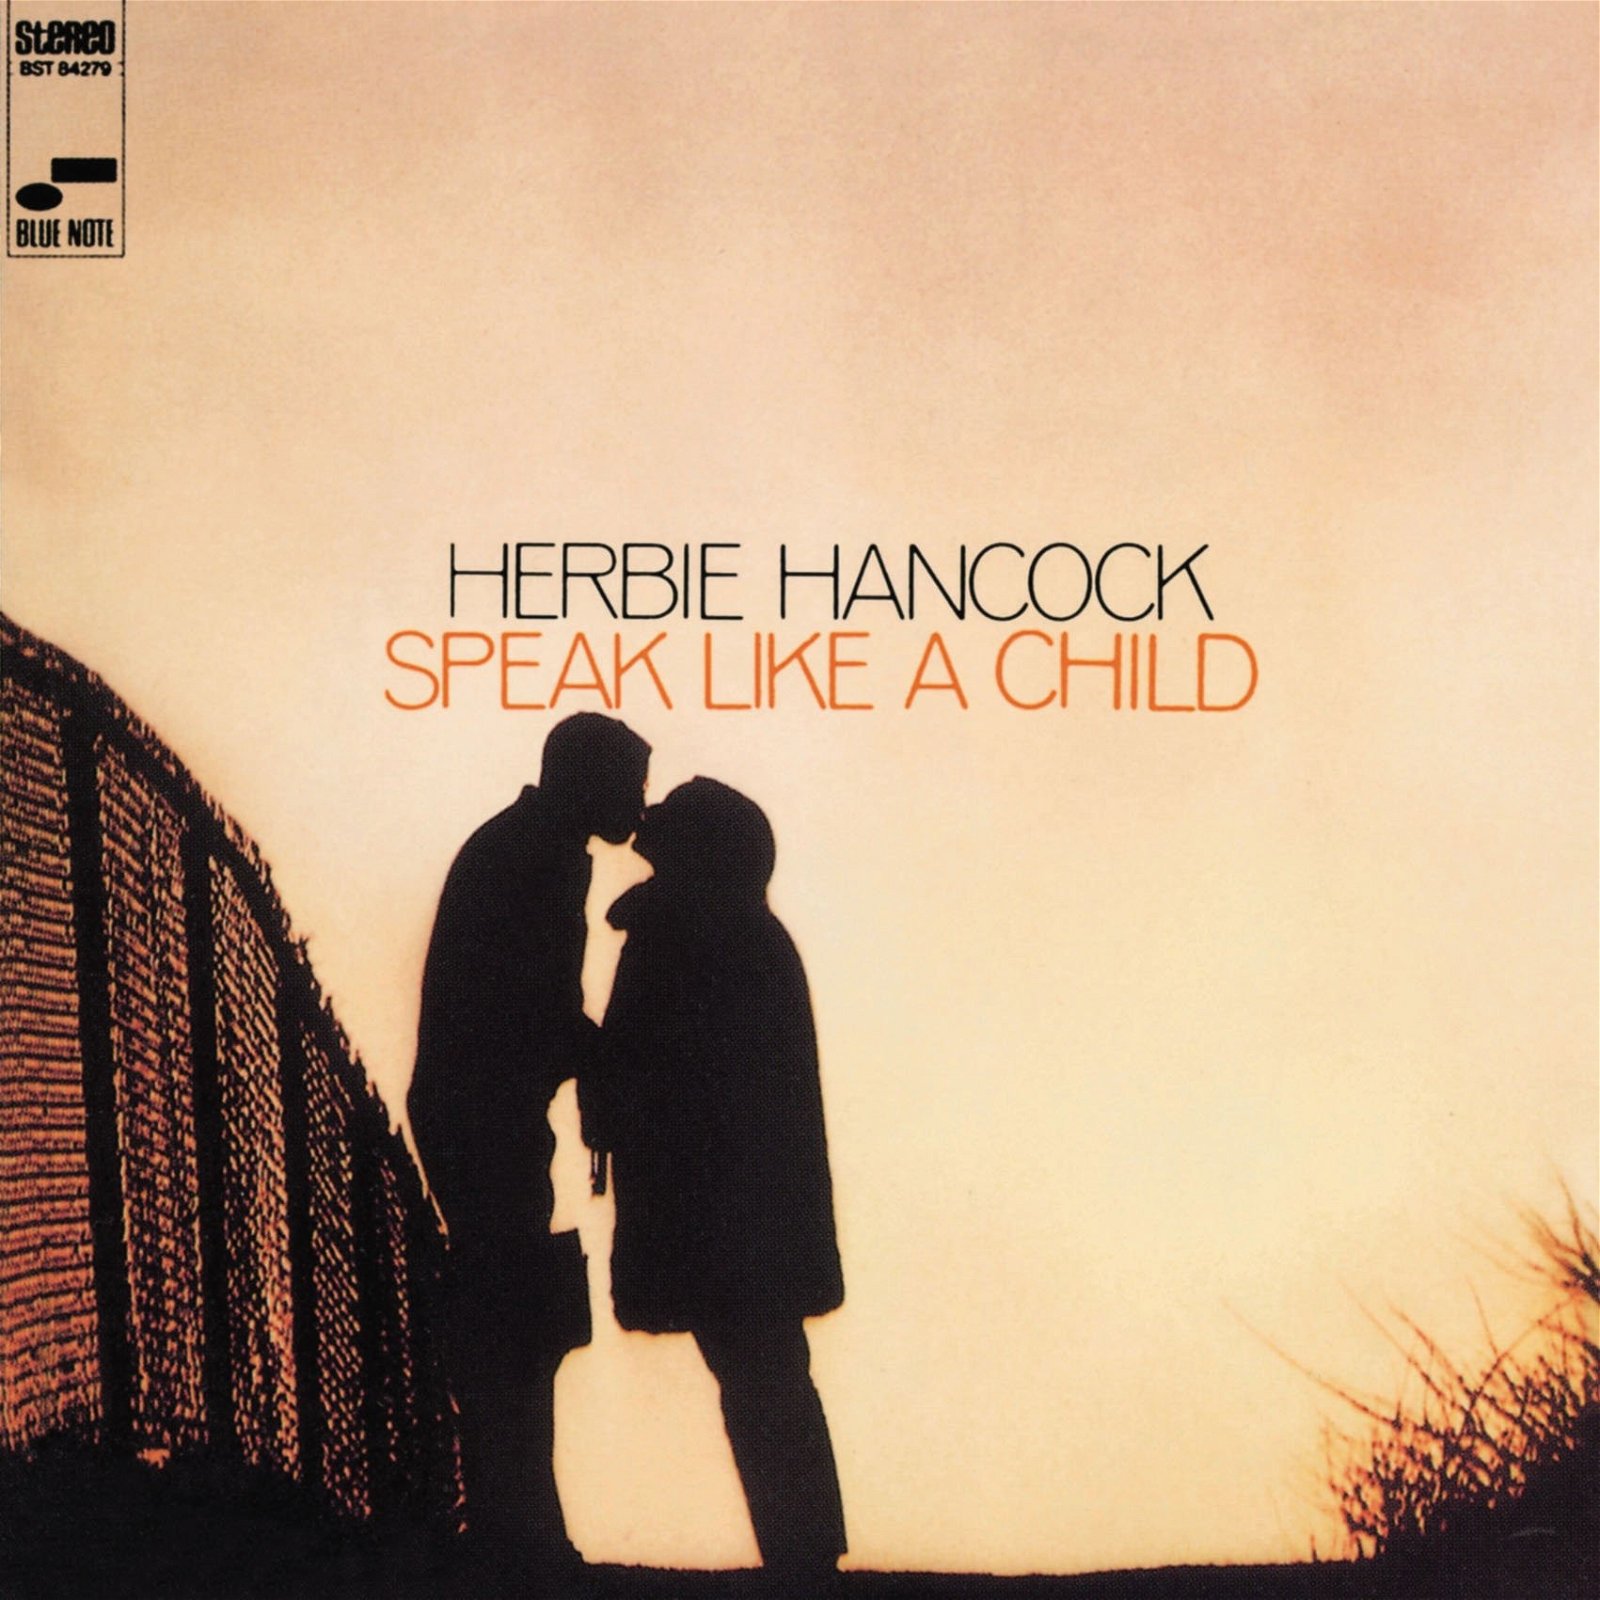 CD Shop - HANCOCK, HERBIE SPEAK LIKE A CHILD